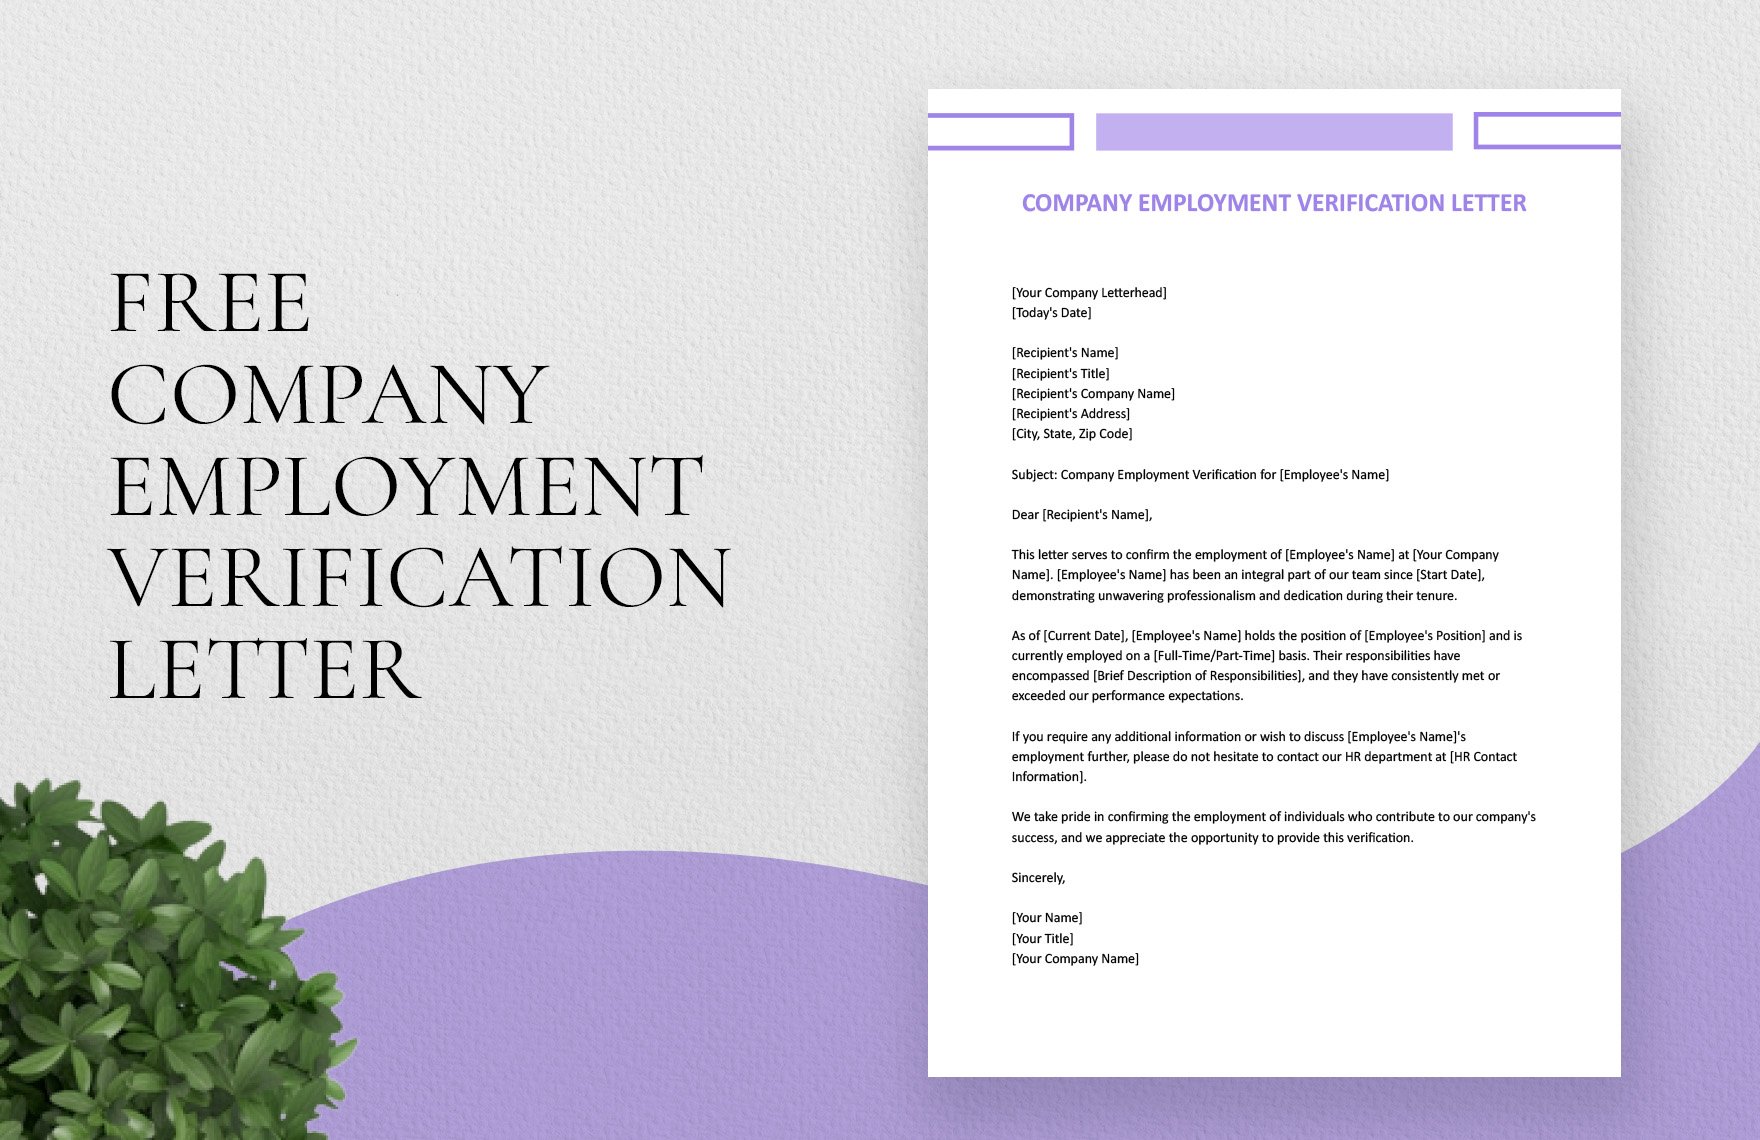 Free Company Employment Verification Letter